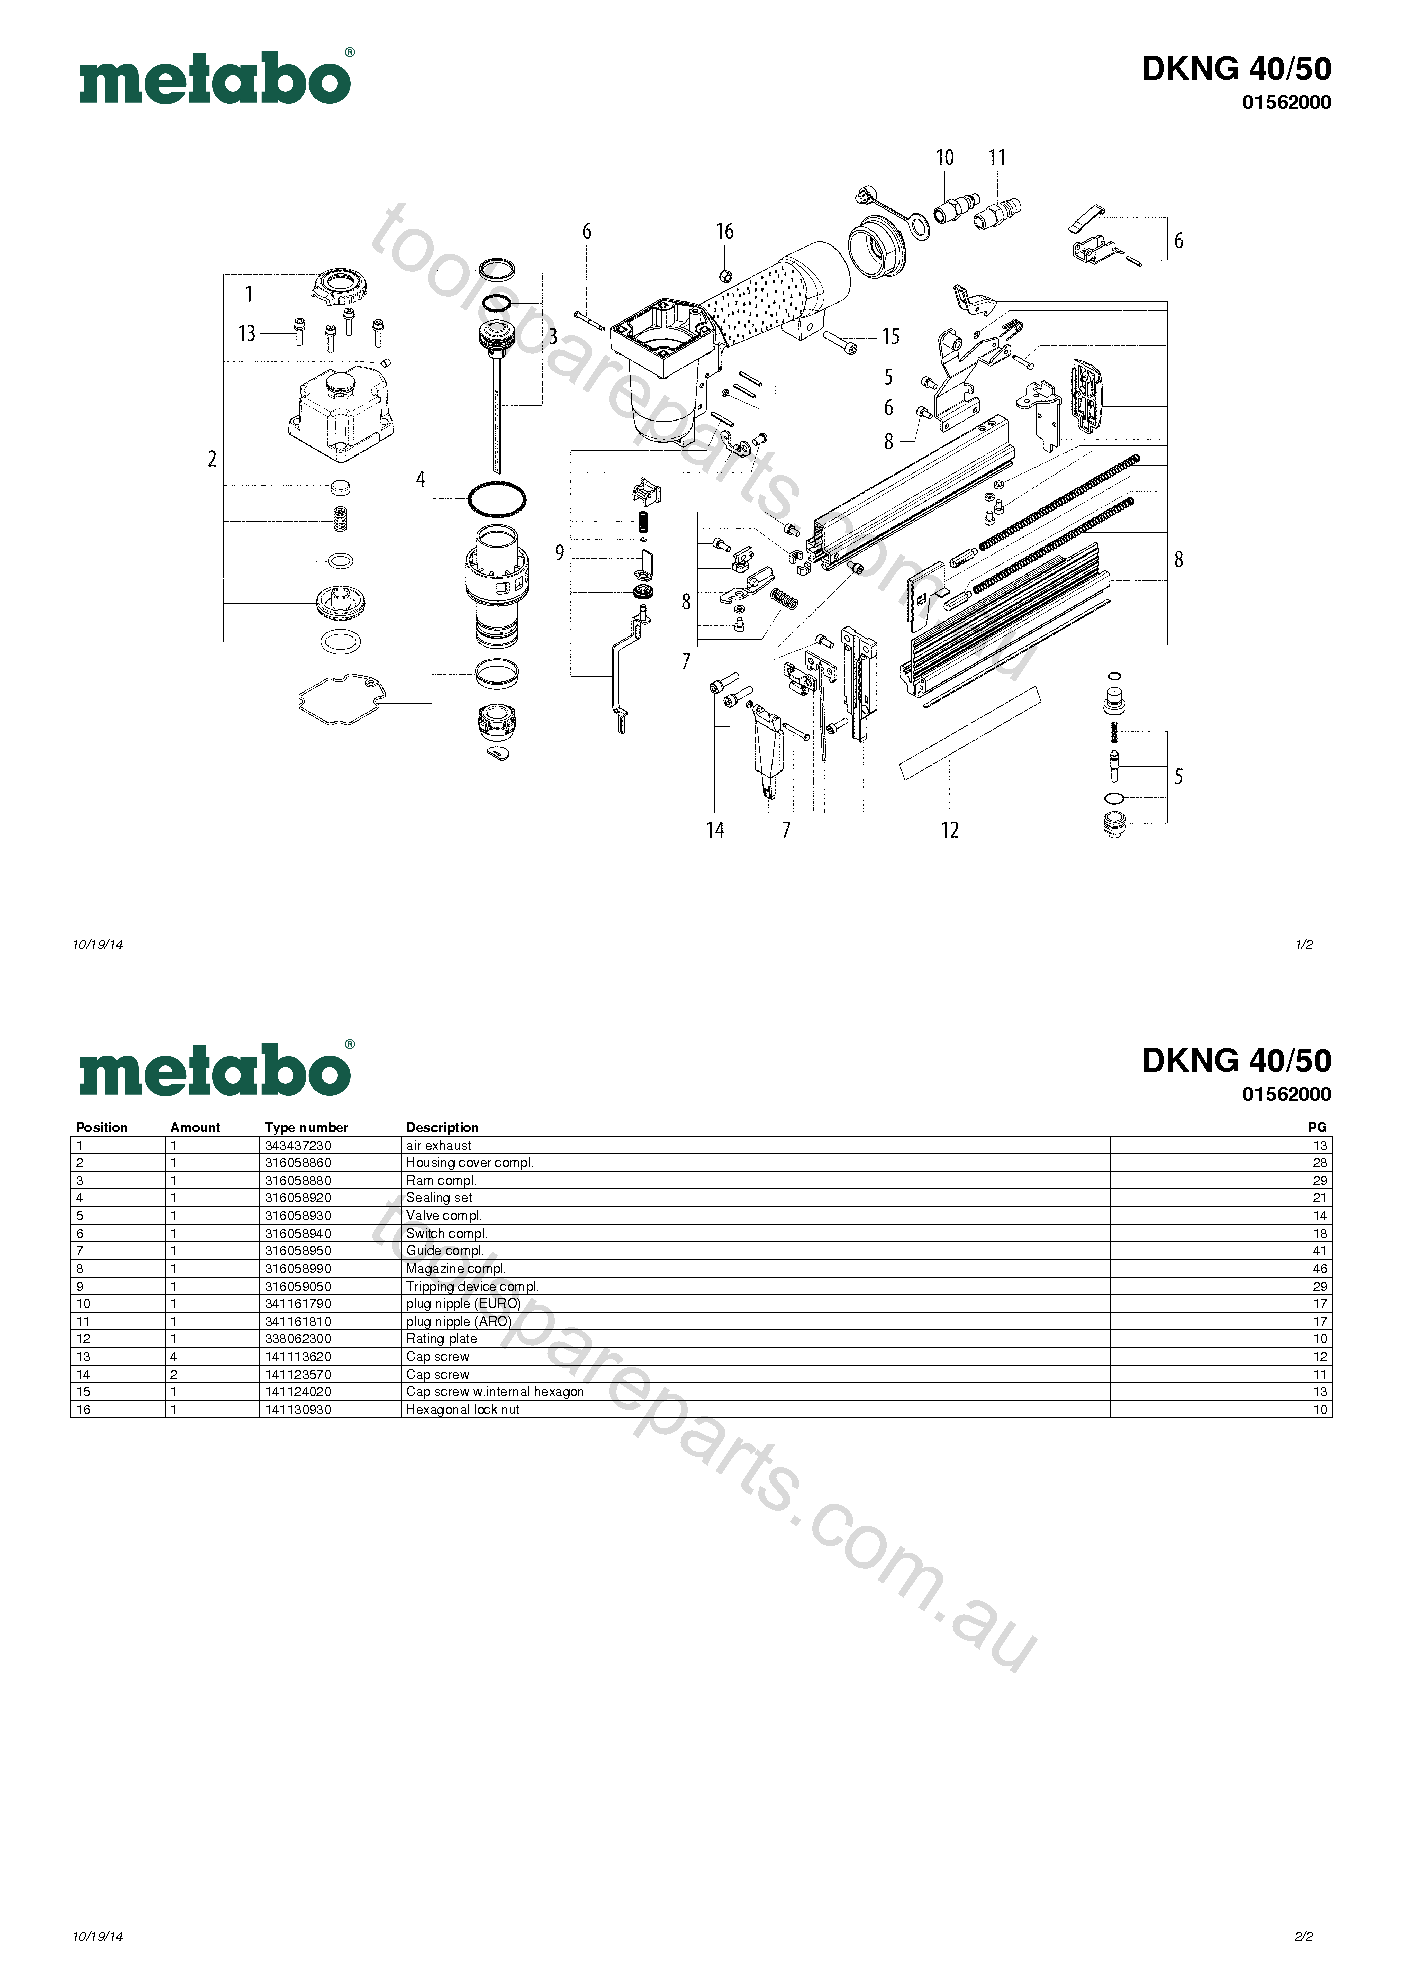 Metabo DKNG 40/50 01562000  Diagram 1